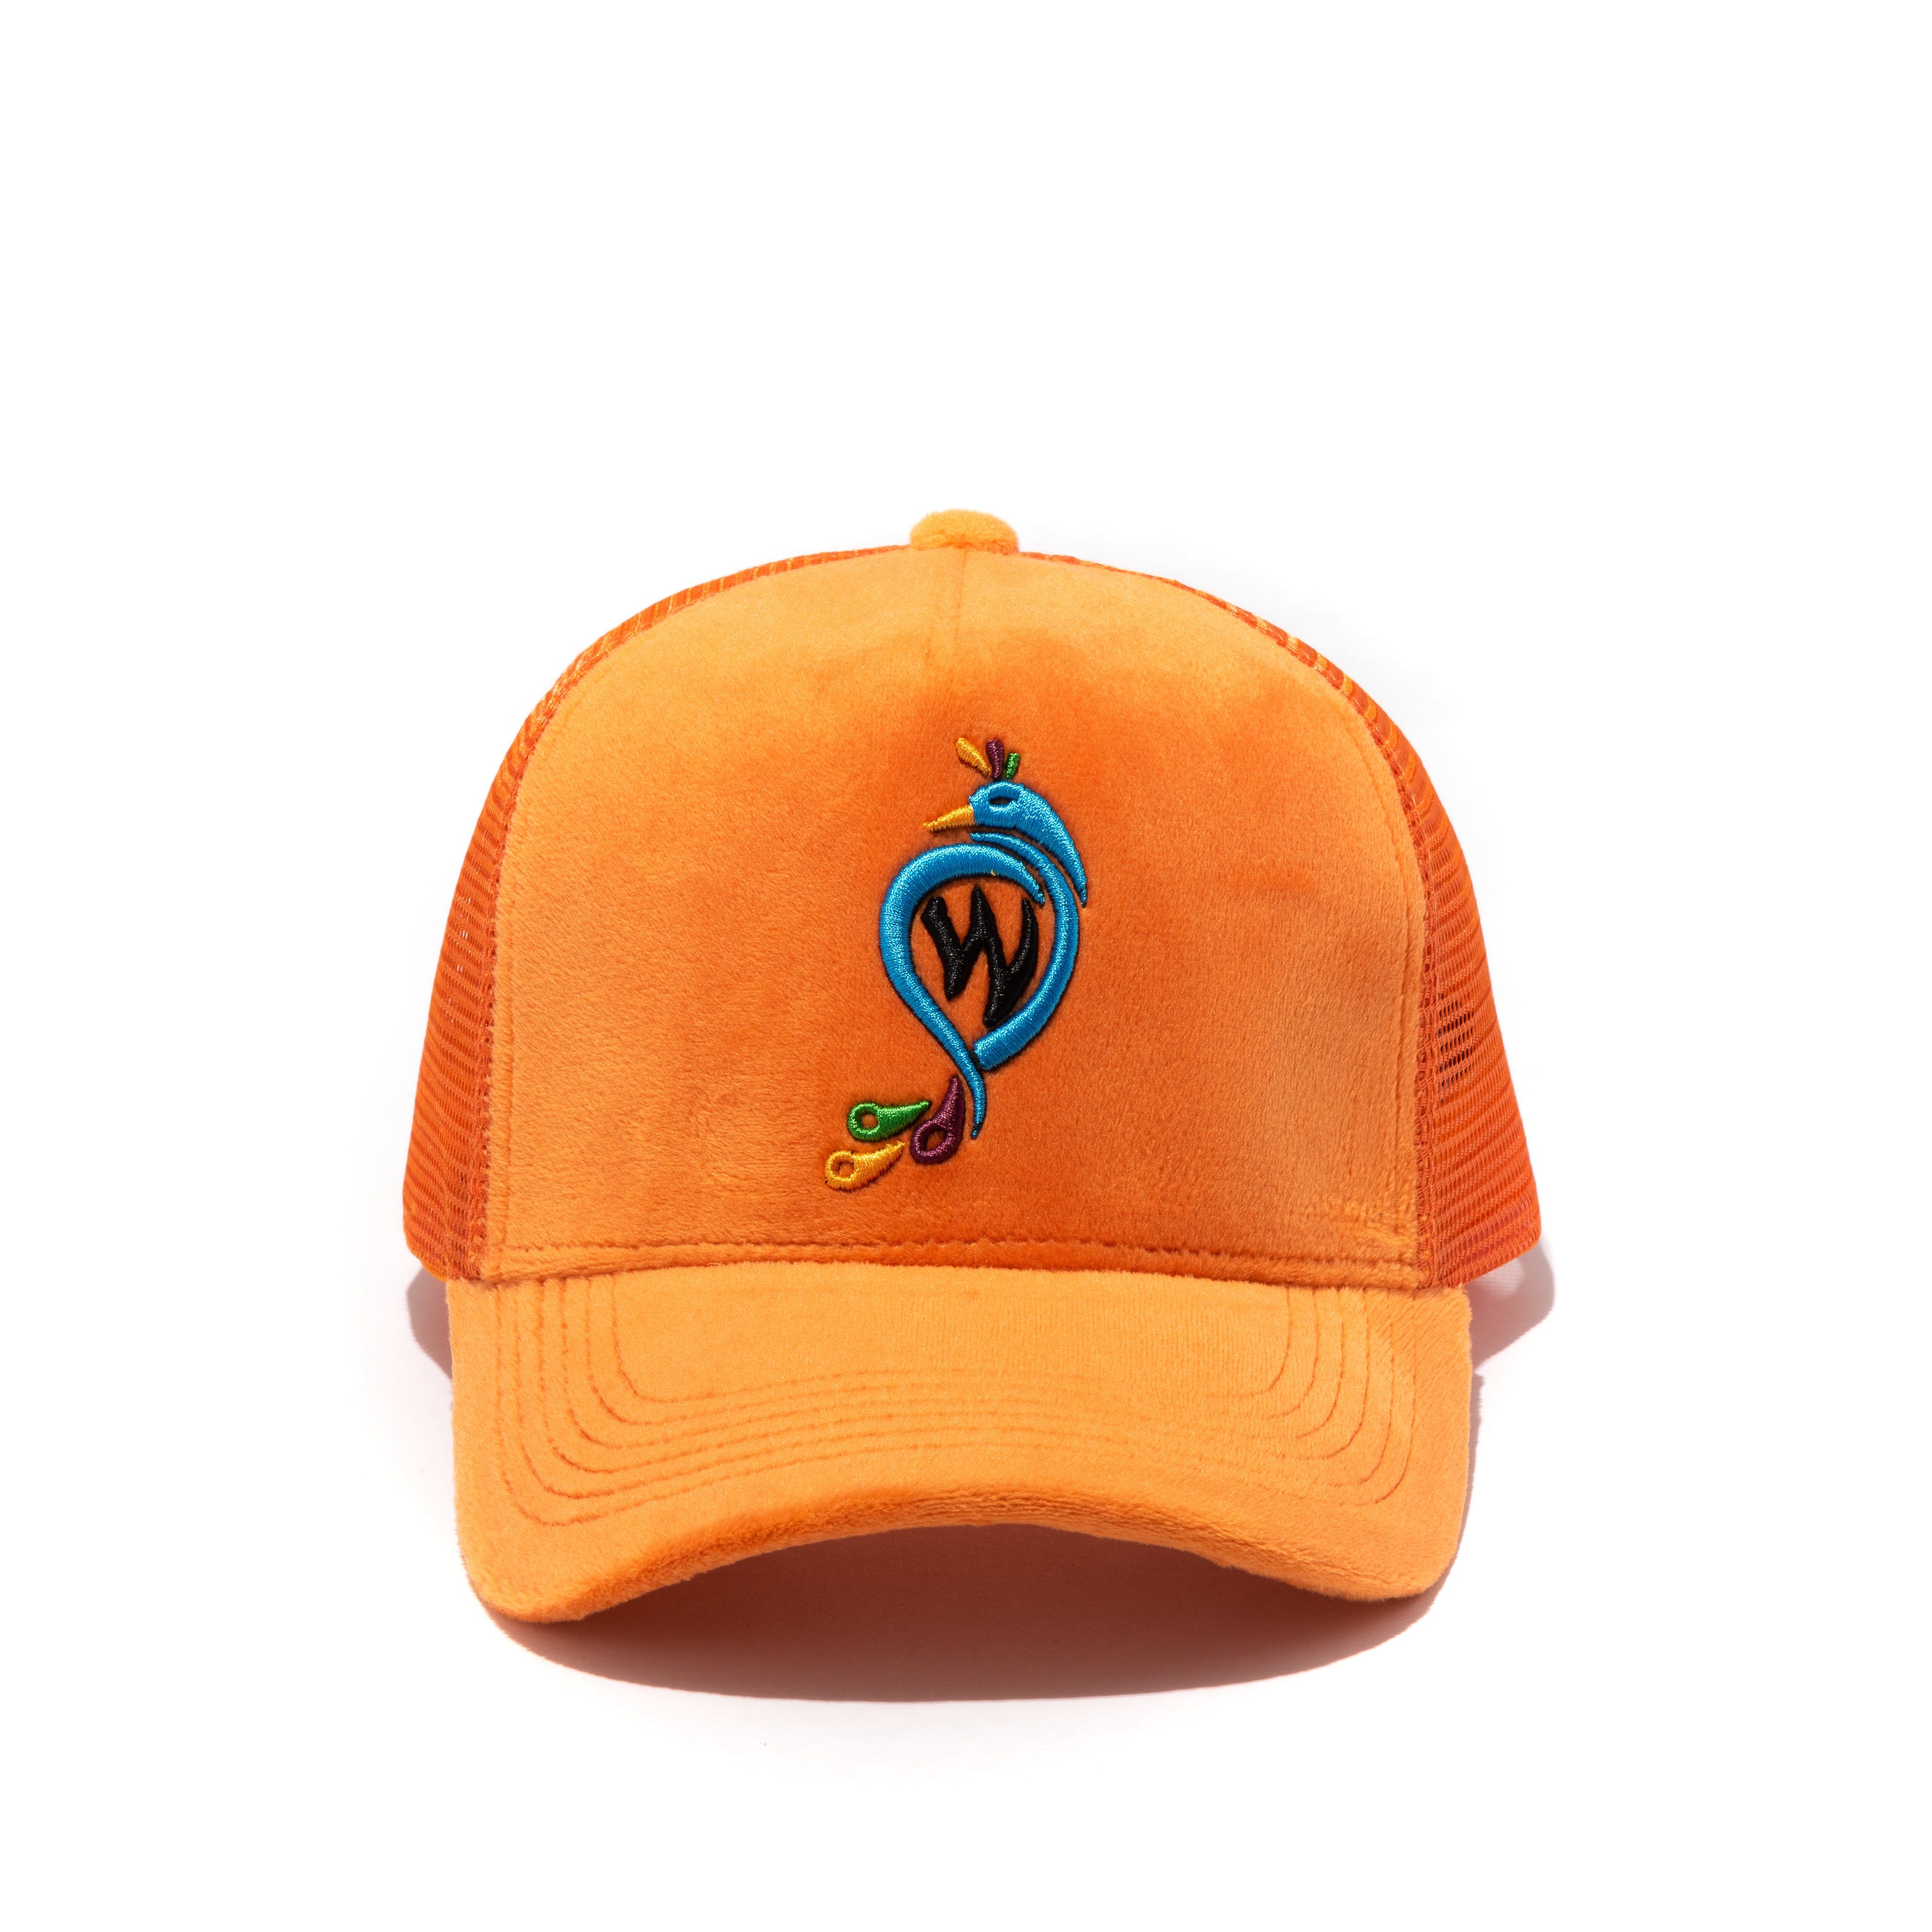 Trucker Hat Peacock-Orange